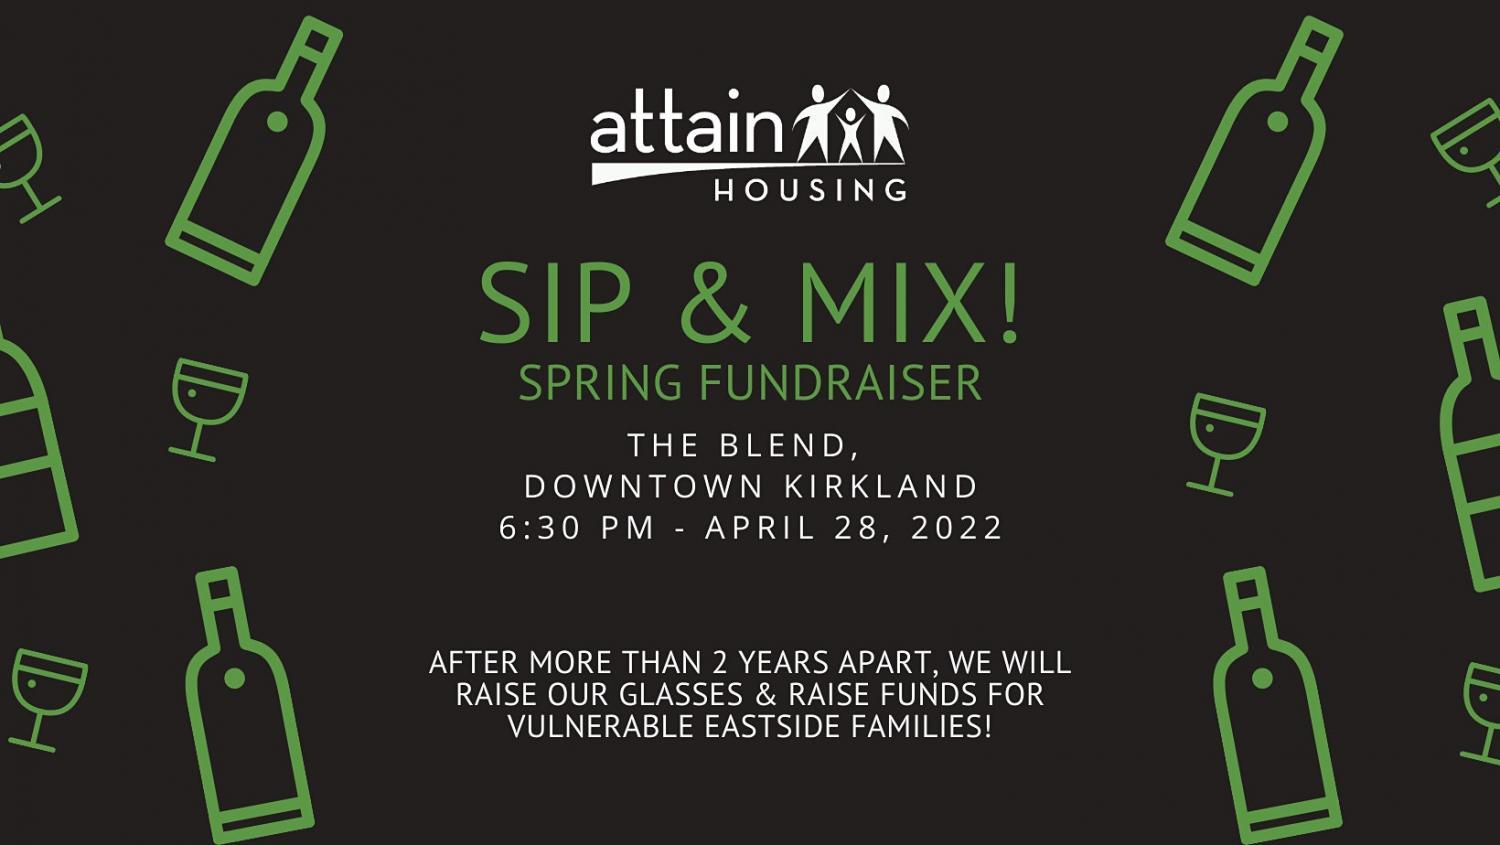 Sip & Mix! Spring Fundraiser for Attain Housing